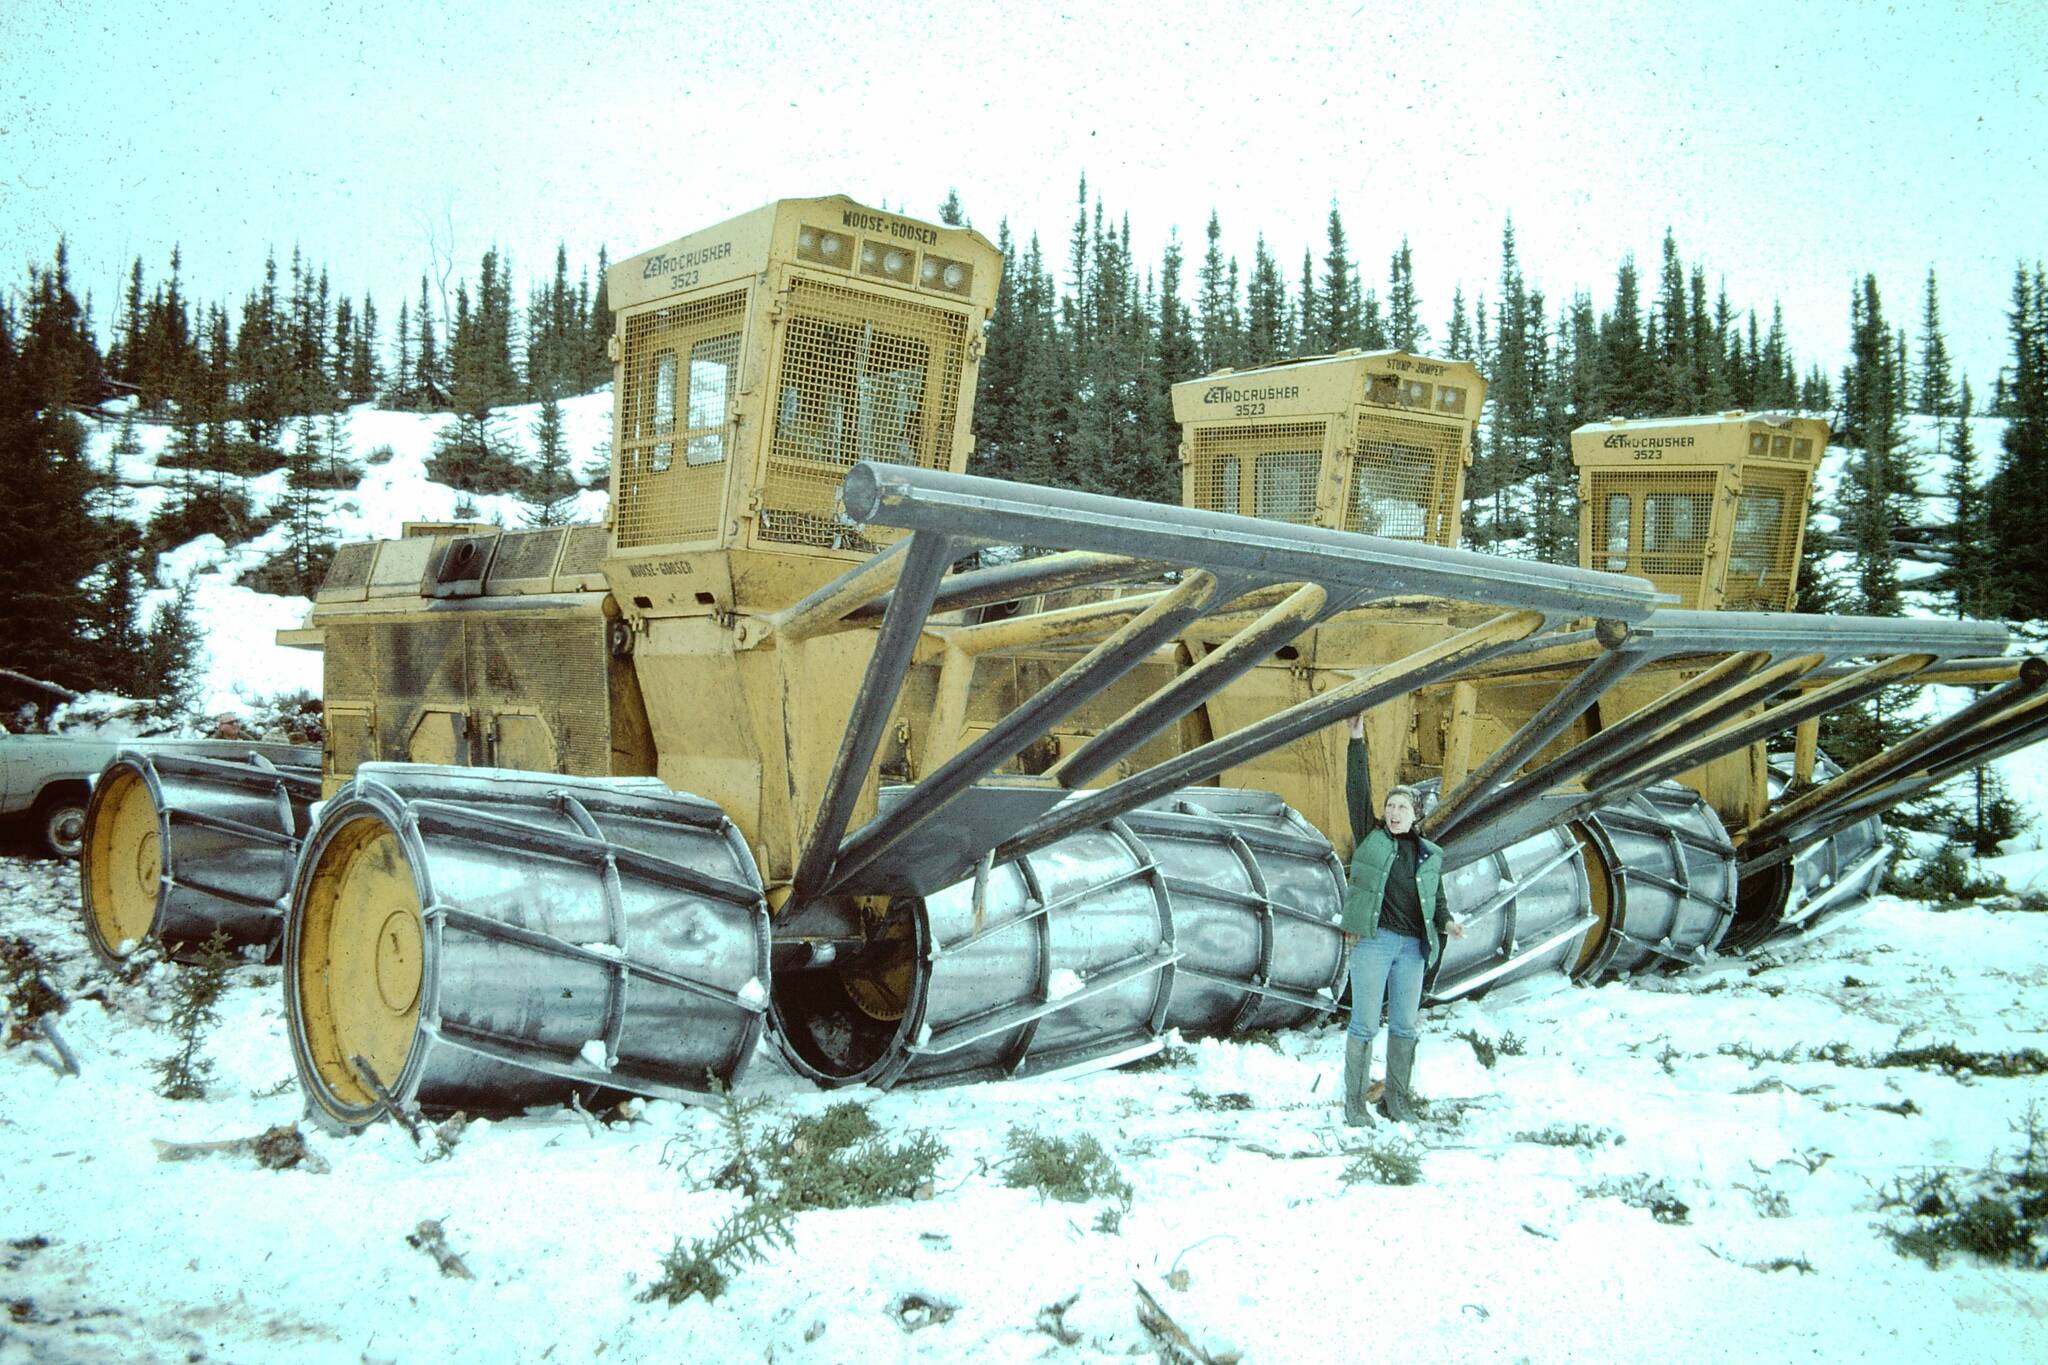 The Kenai National Moose Range's three LeTourneau crushers off of Mystery Creek Road, March 14, 1978. (Photo provided by USFWS)